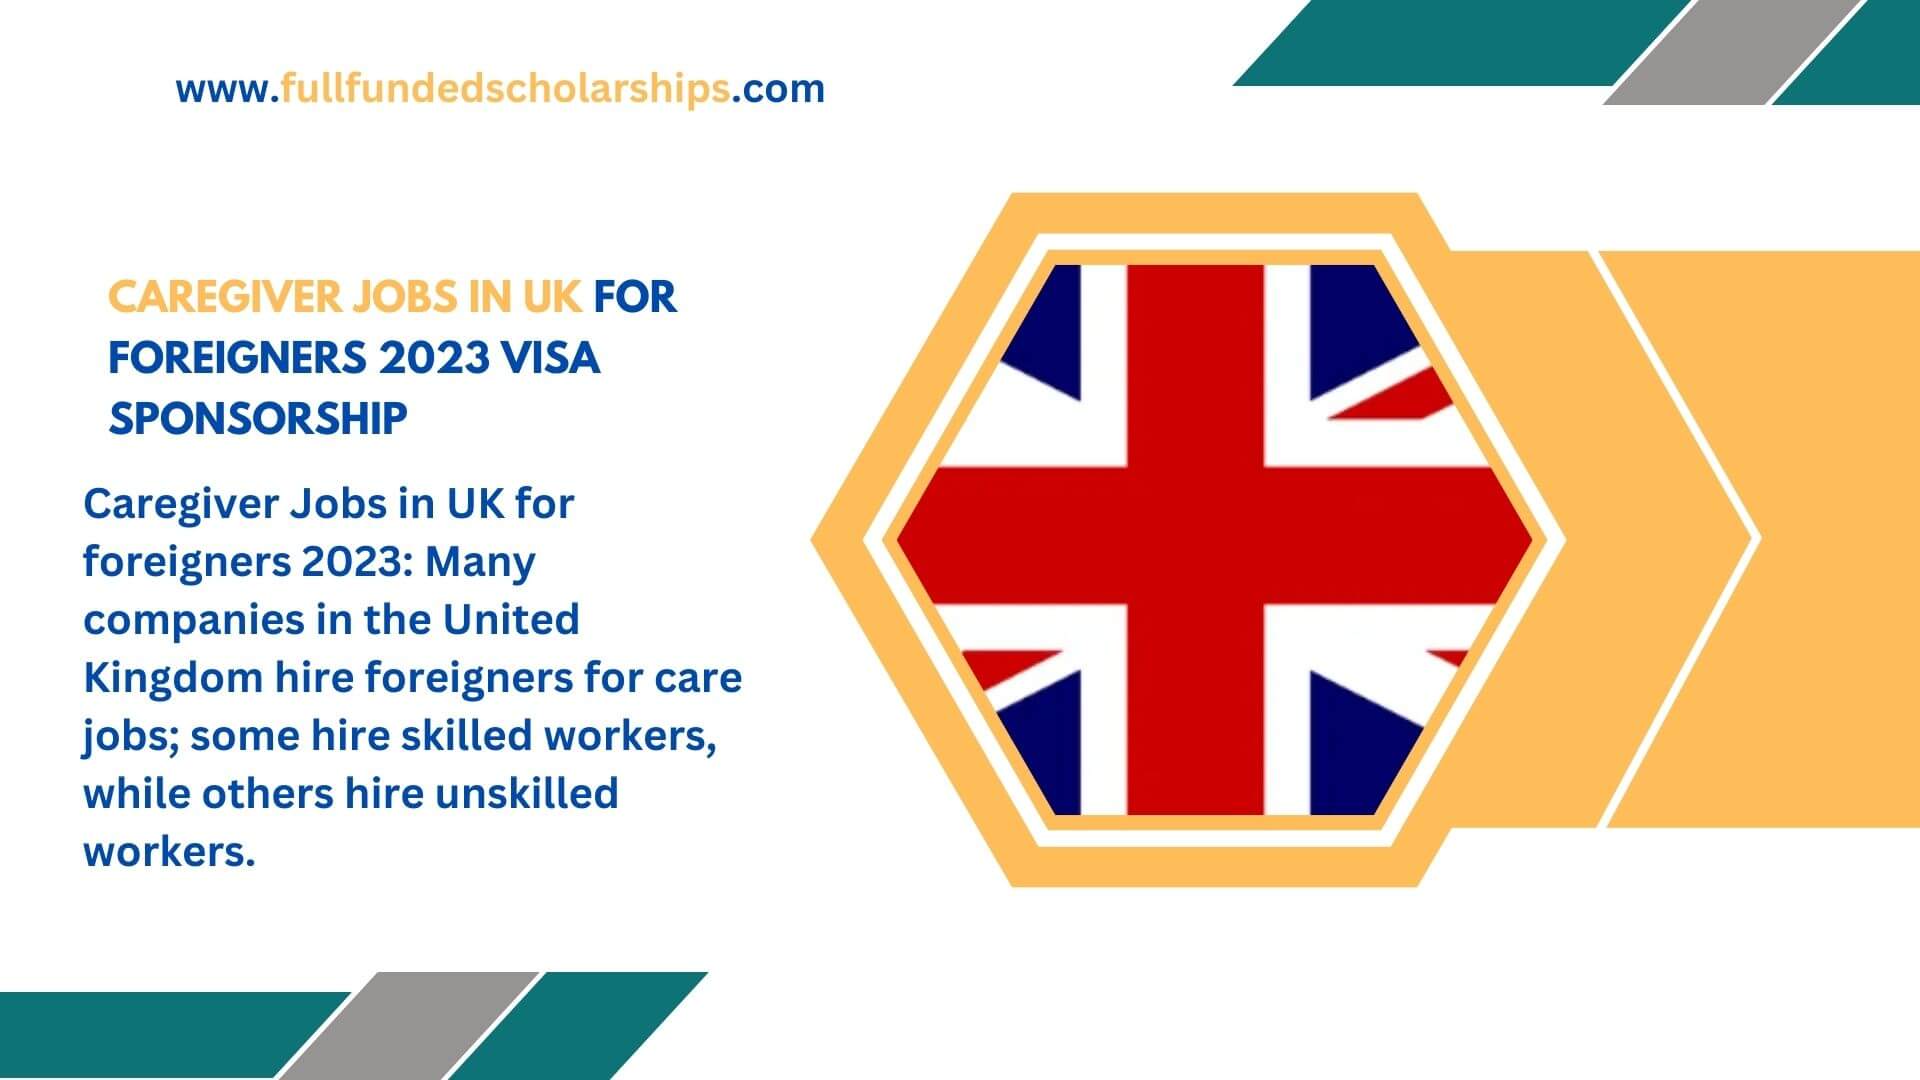 Caregiver Jobs in UK for foreigners 2023 Visa Sponsorship